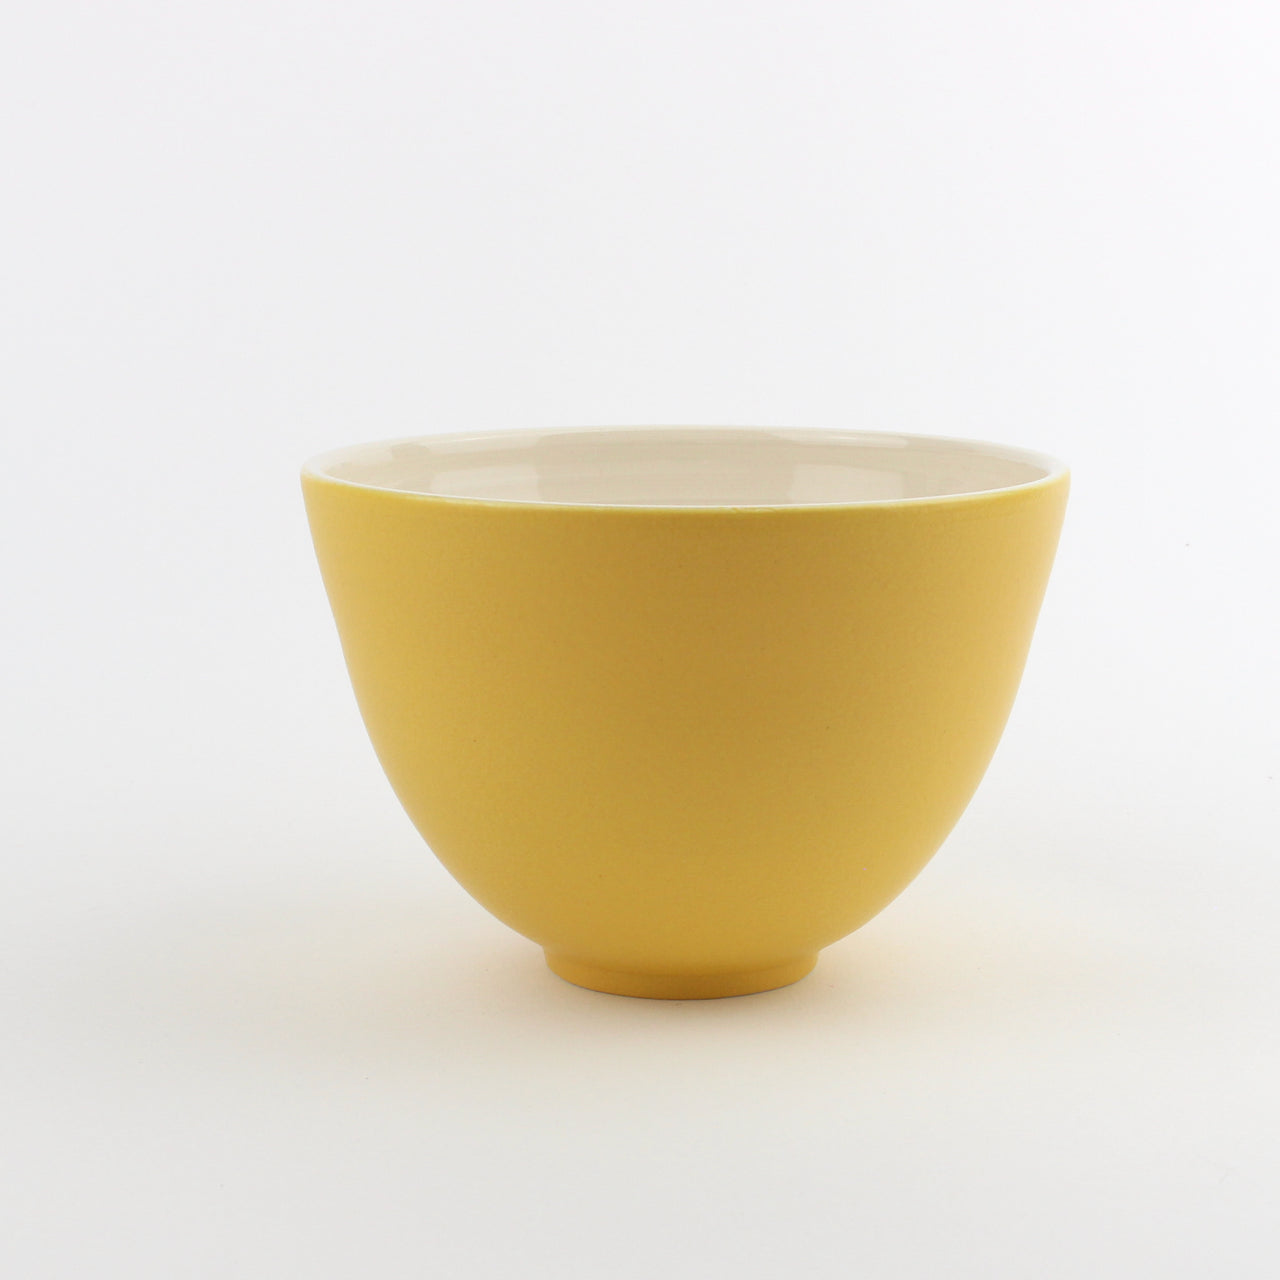 Lucy Burley - Golden Orange bowl